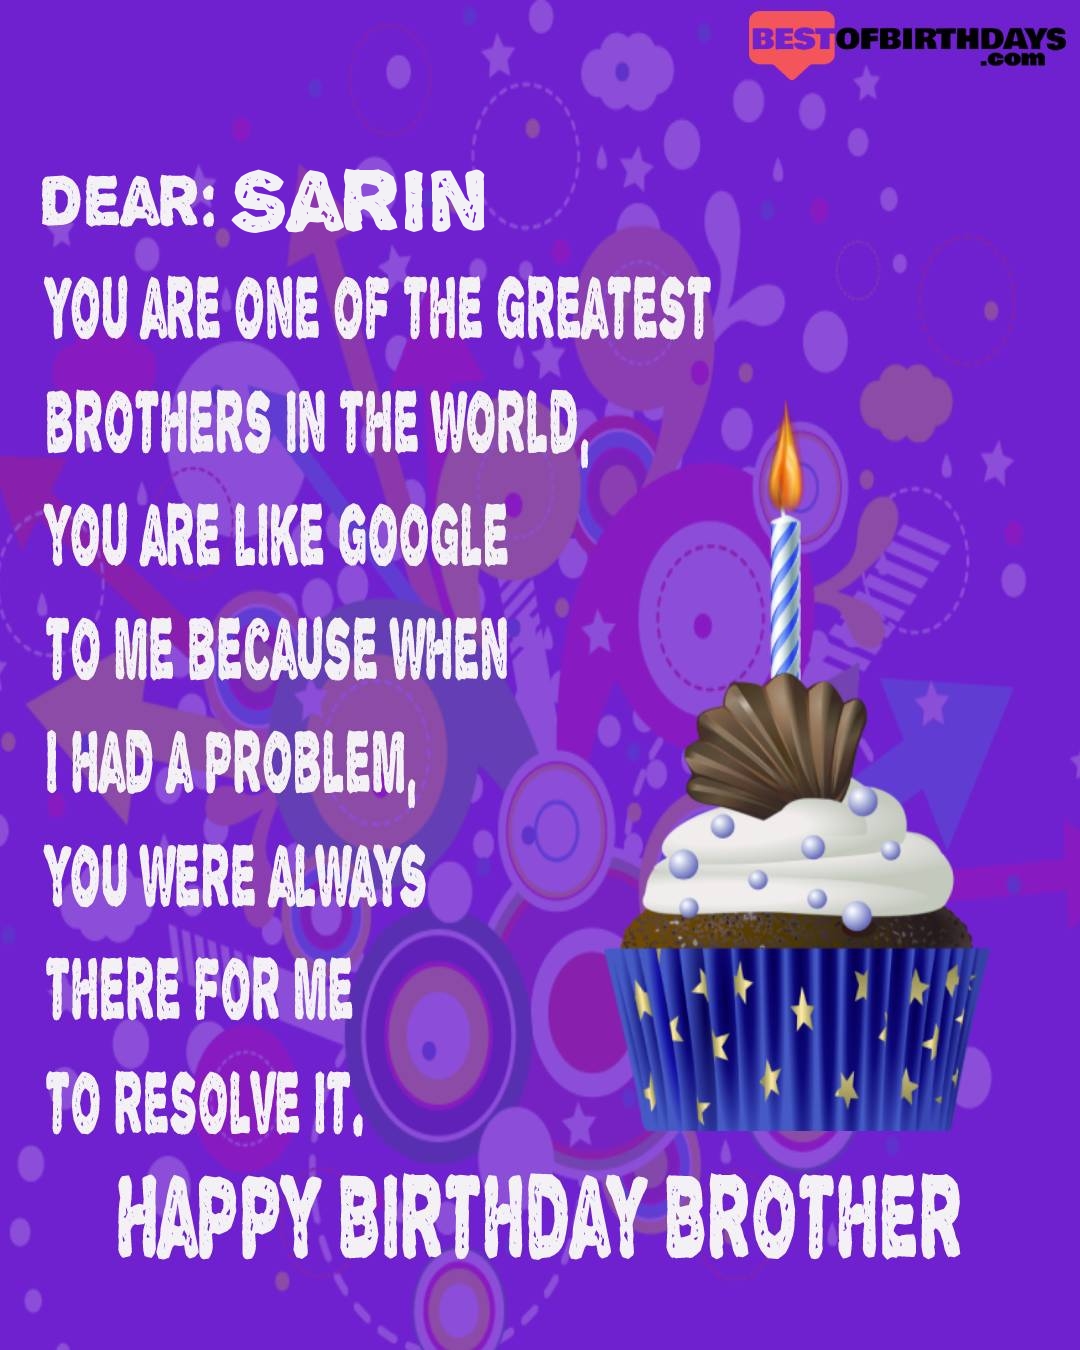 Happy birthday sarin bhai brother bro